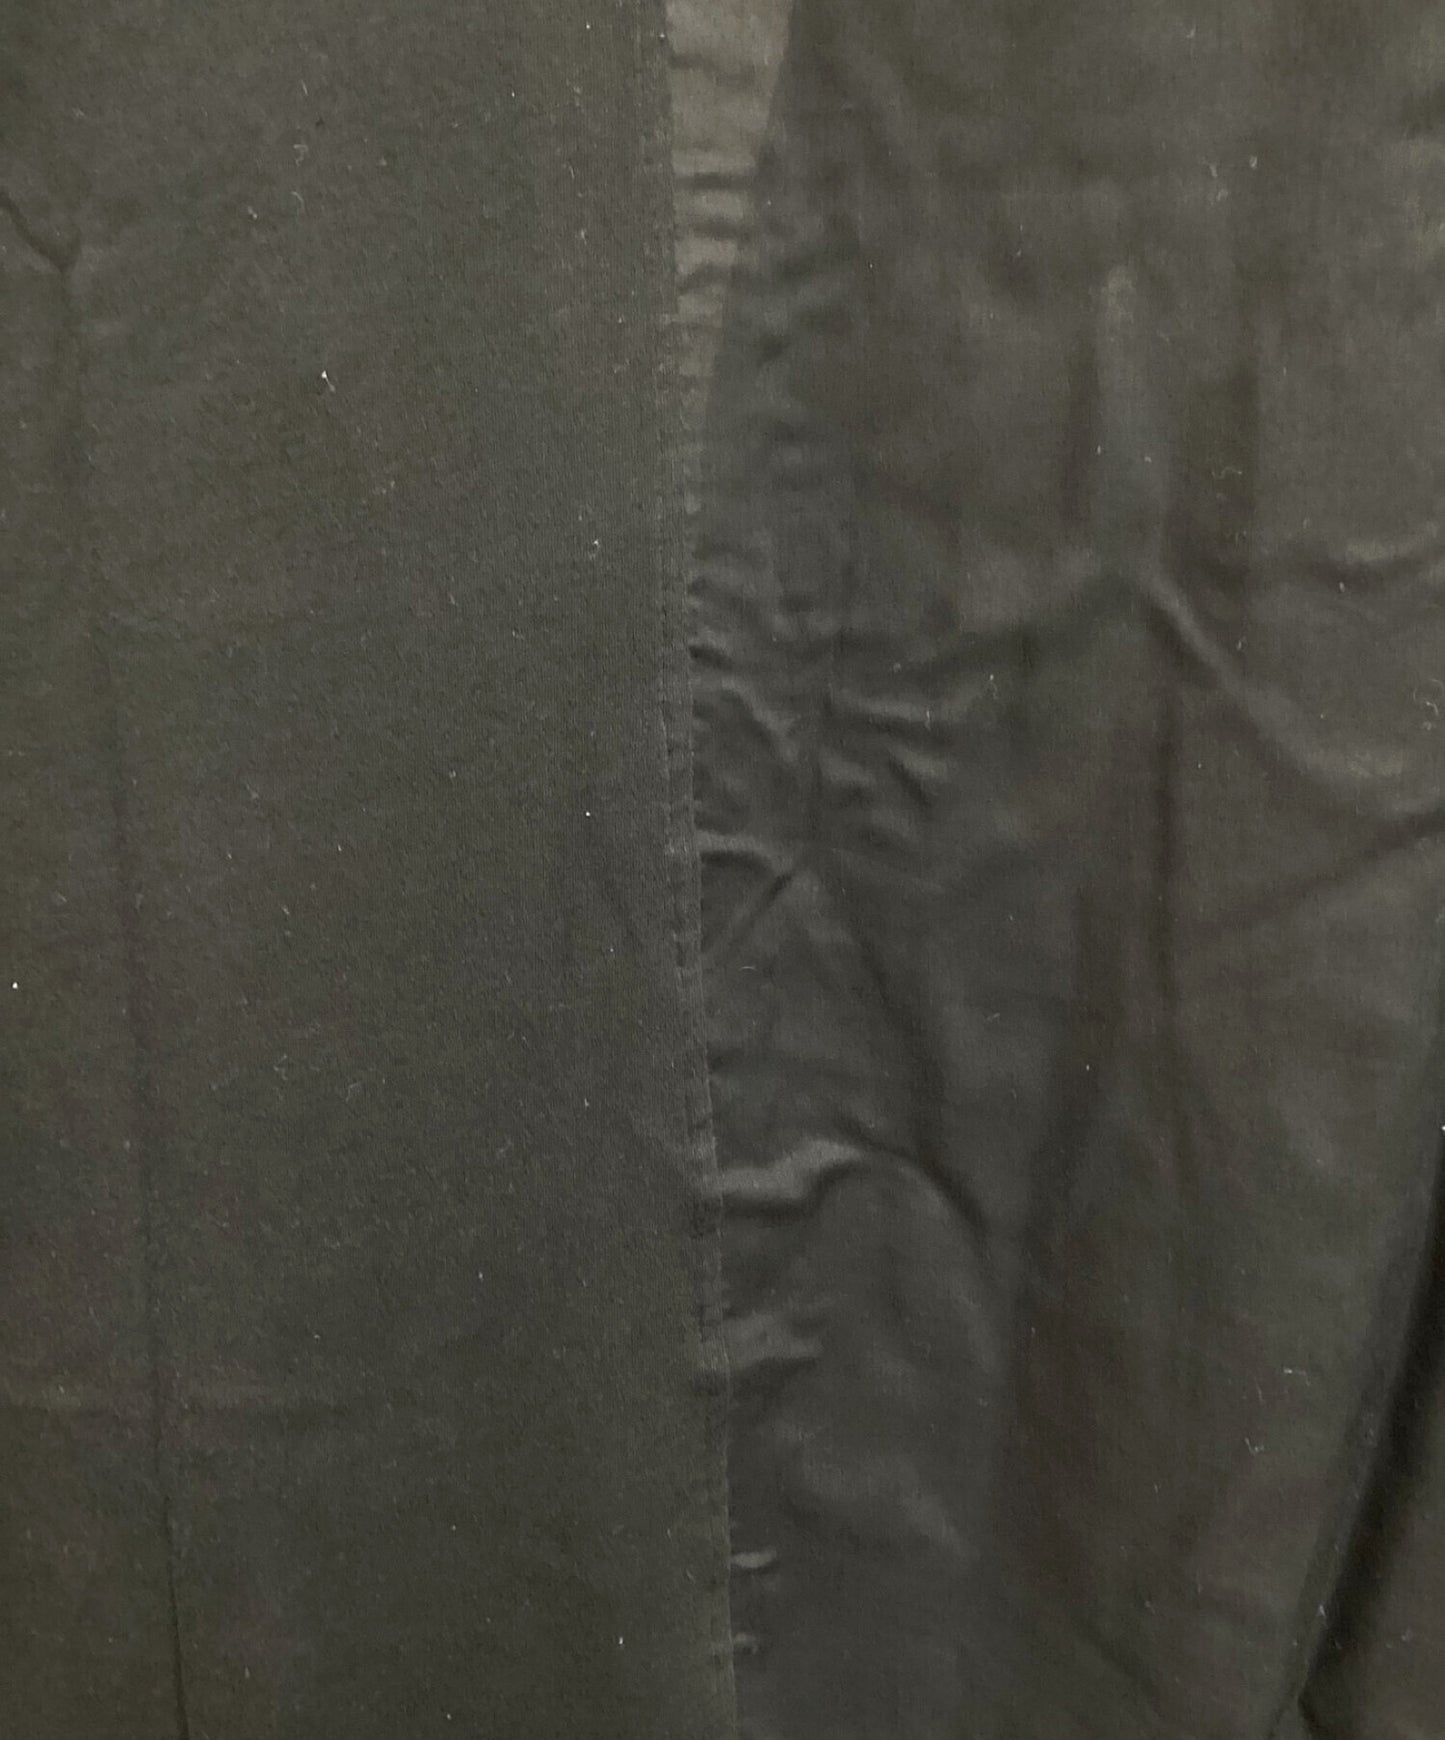 Yohji Yamamoto Black Scandal Long Shirt NH-B20-824